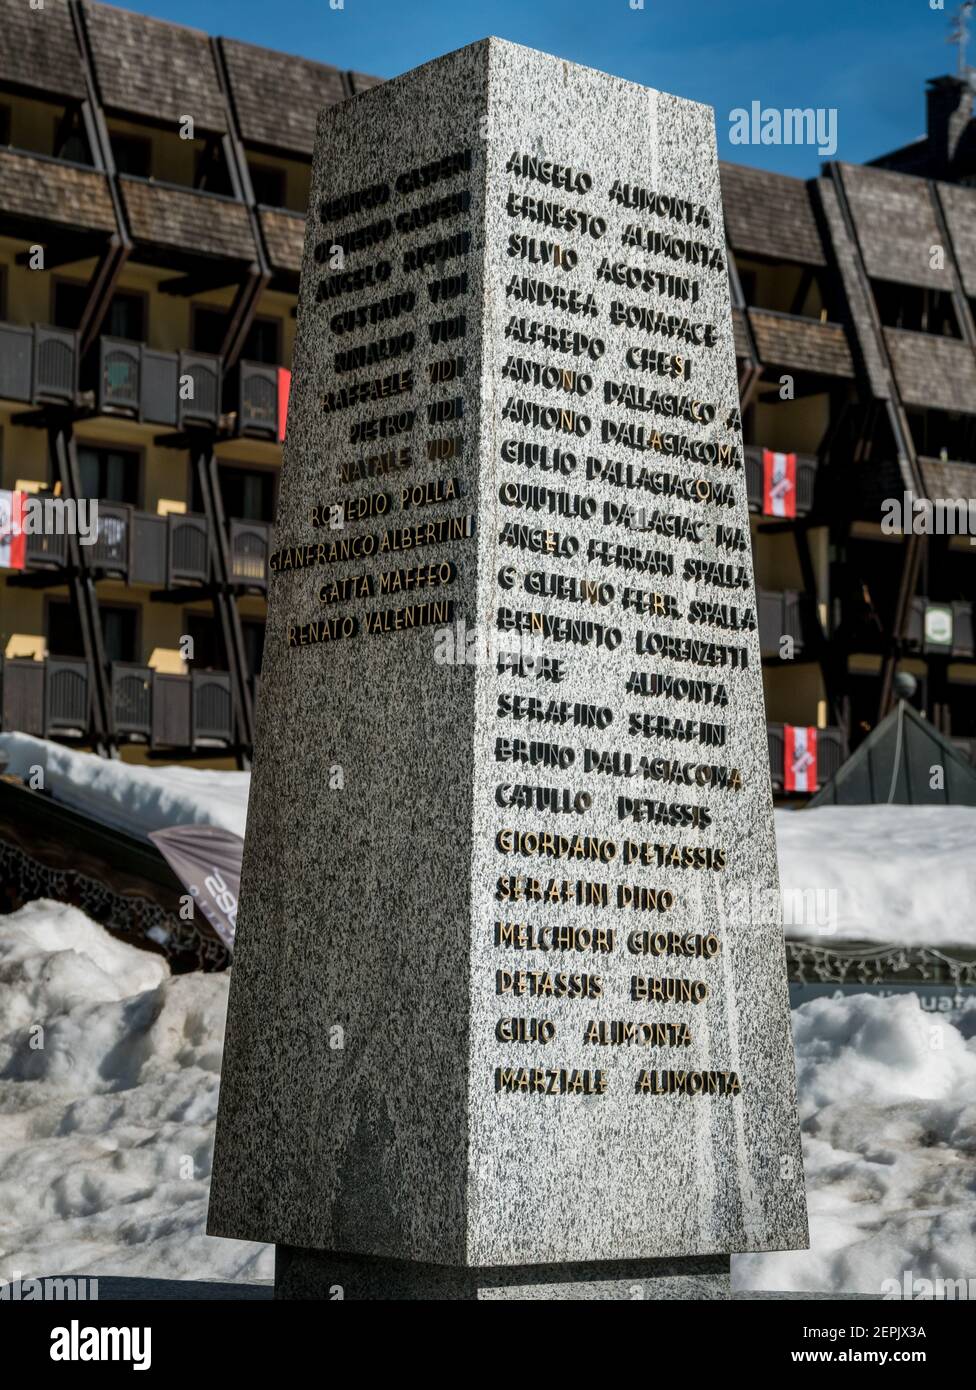 Gruppo Guide Alpin - Monument to Mountain Guides, Madonna di Campilglio, Italy Stock Photo